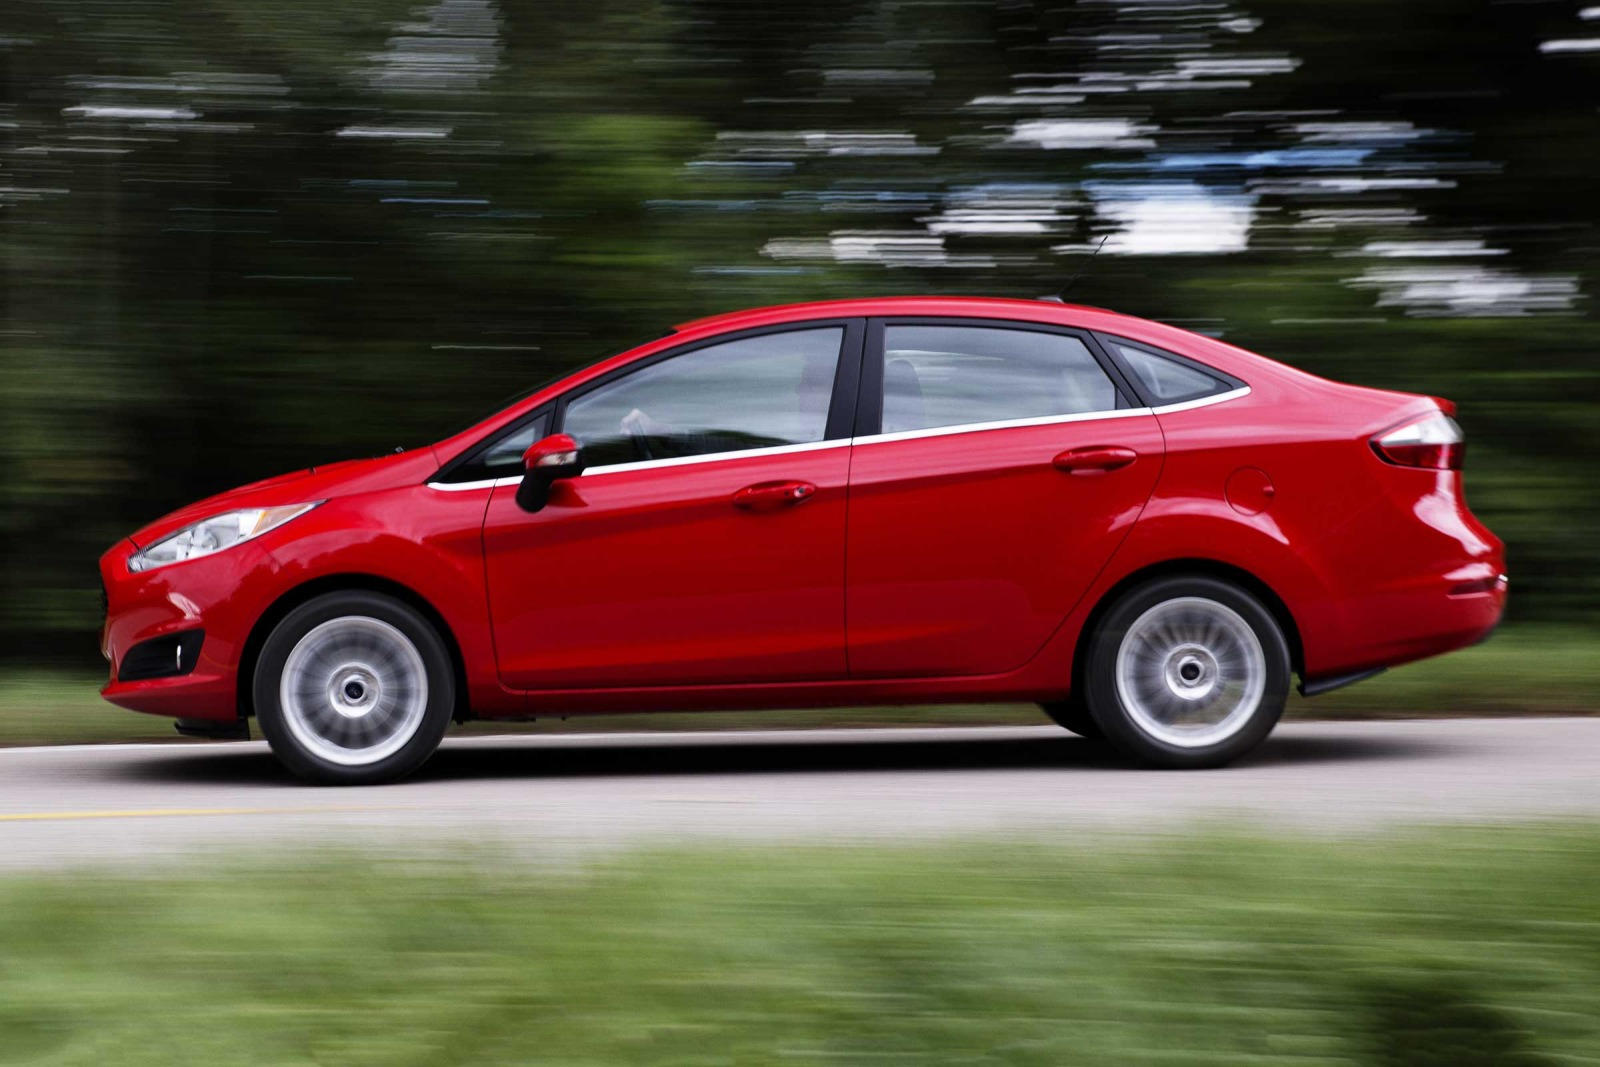 2019 Ford Fiesta Sedan: Review, Trims, Specs, Price, New Interior